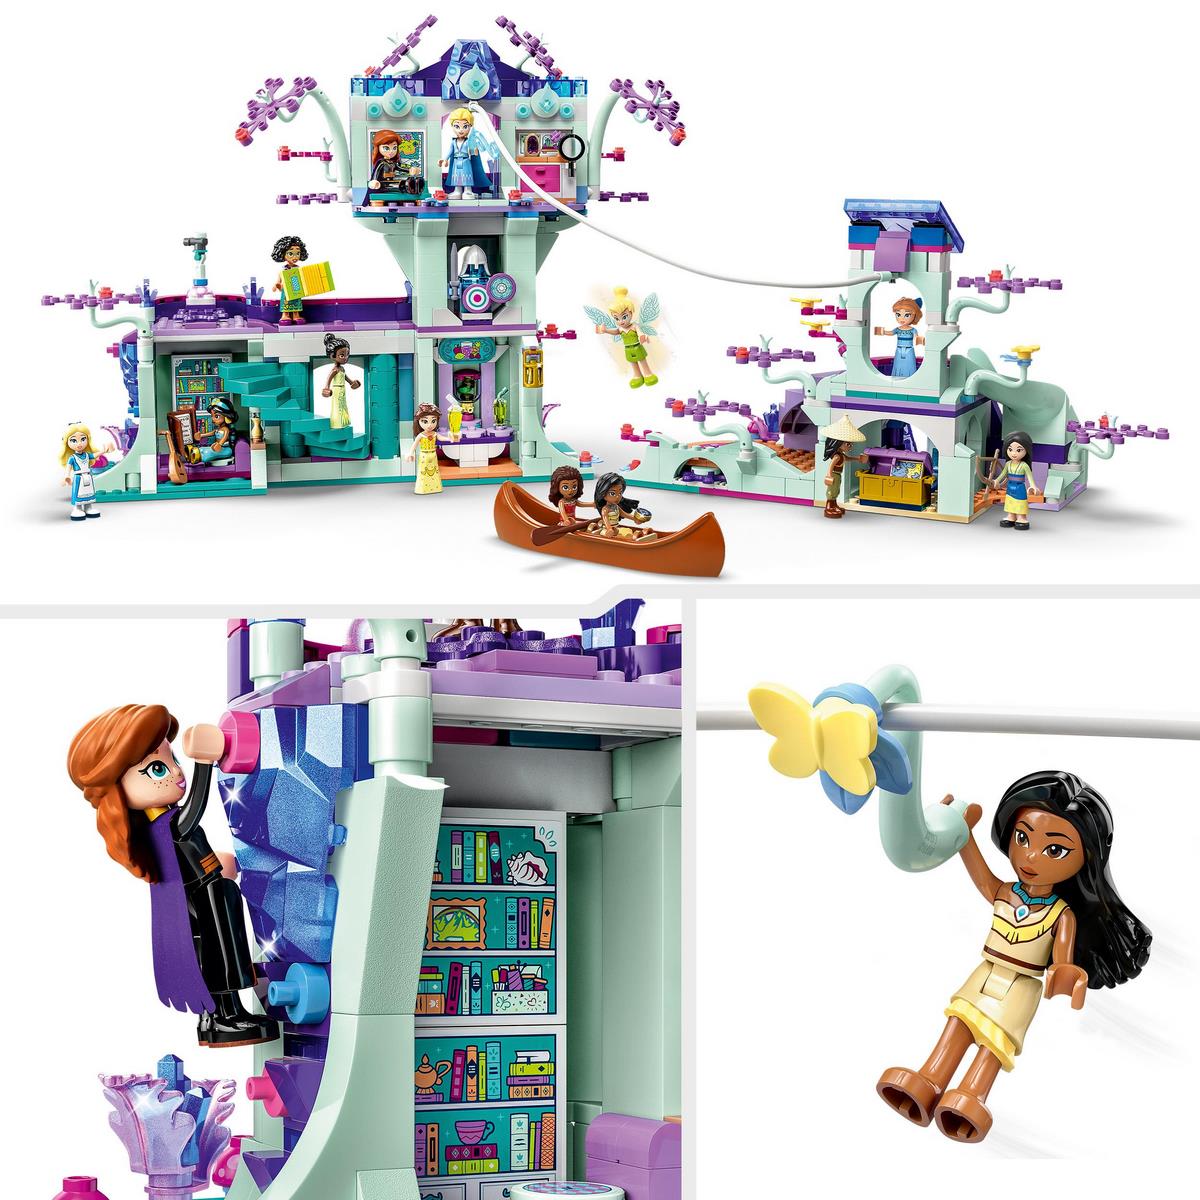 Lego - Disney Classic - La Cabane Enchantée Dans L'arbre - 43215 - DISNEY